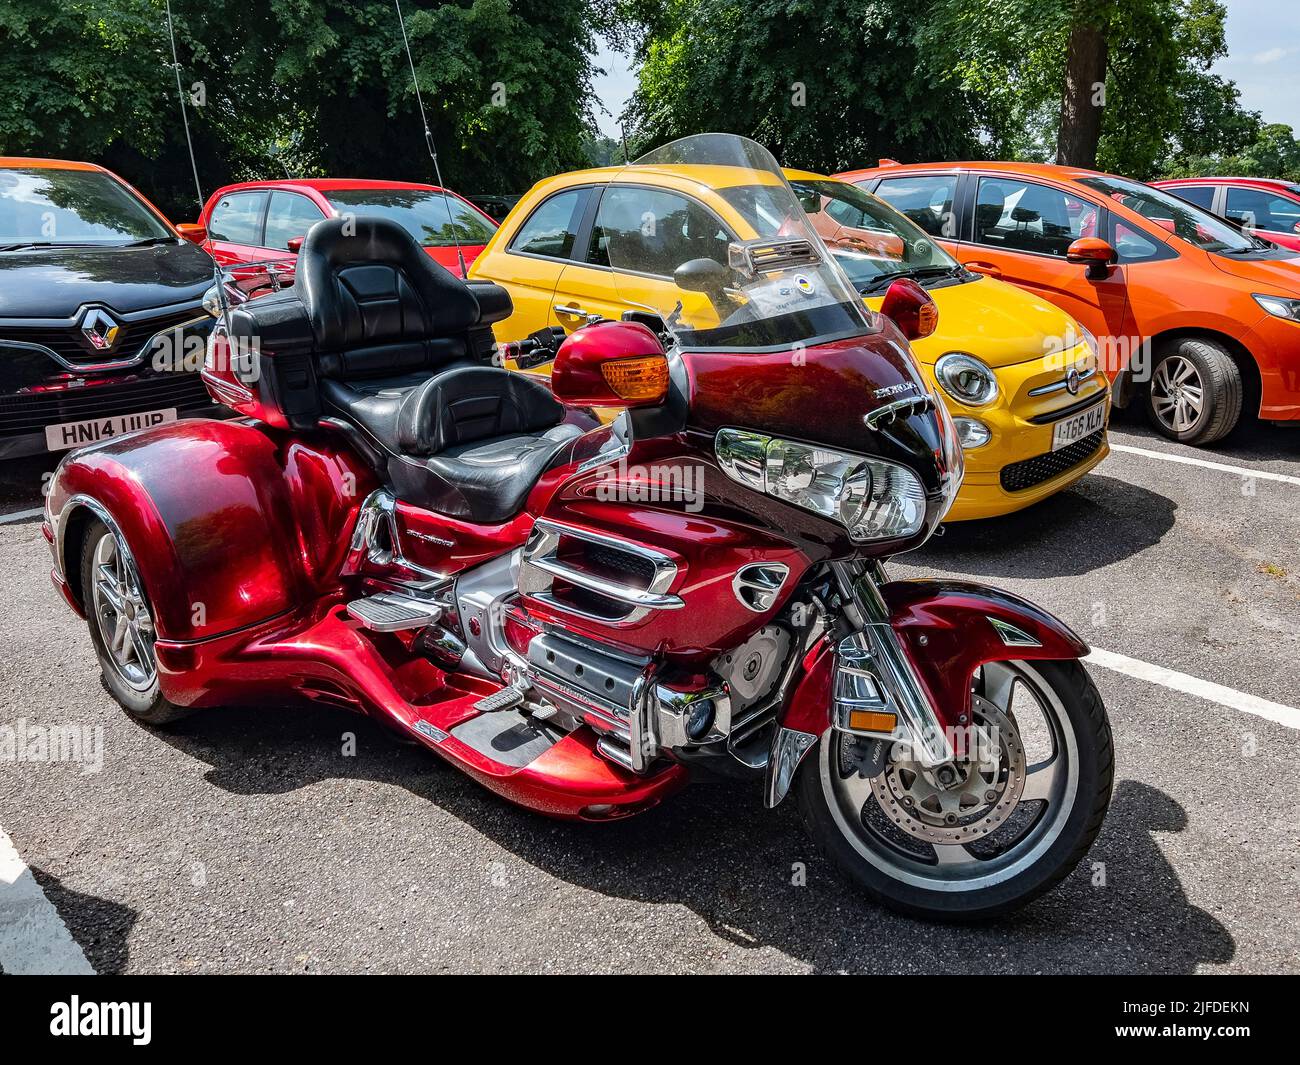 Honda Trike - 3 wheel motorcycle. Stock Photo